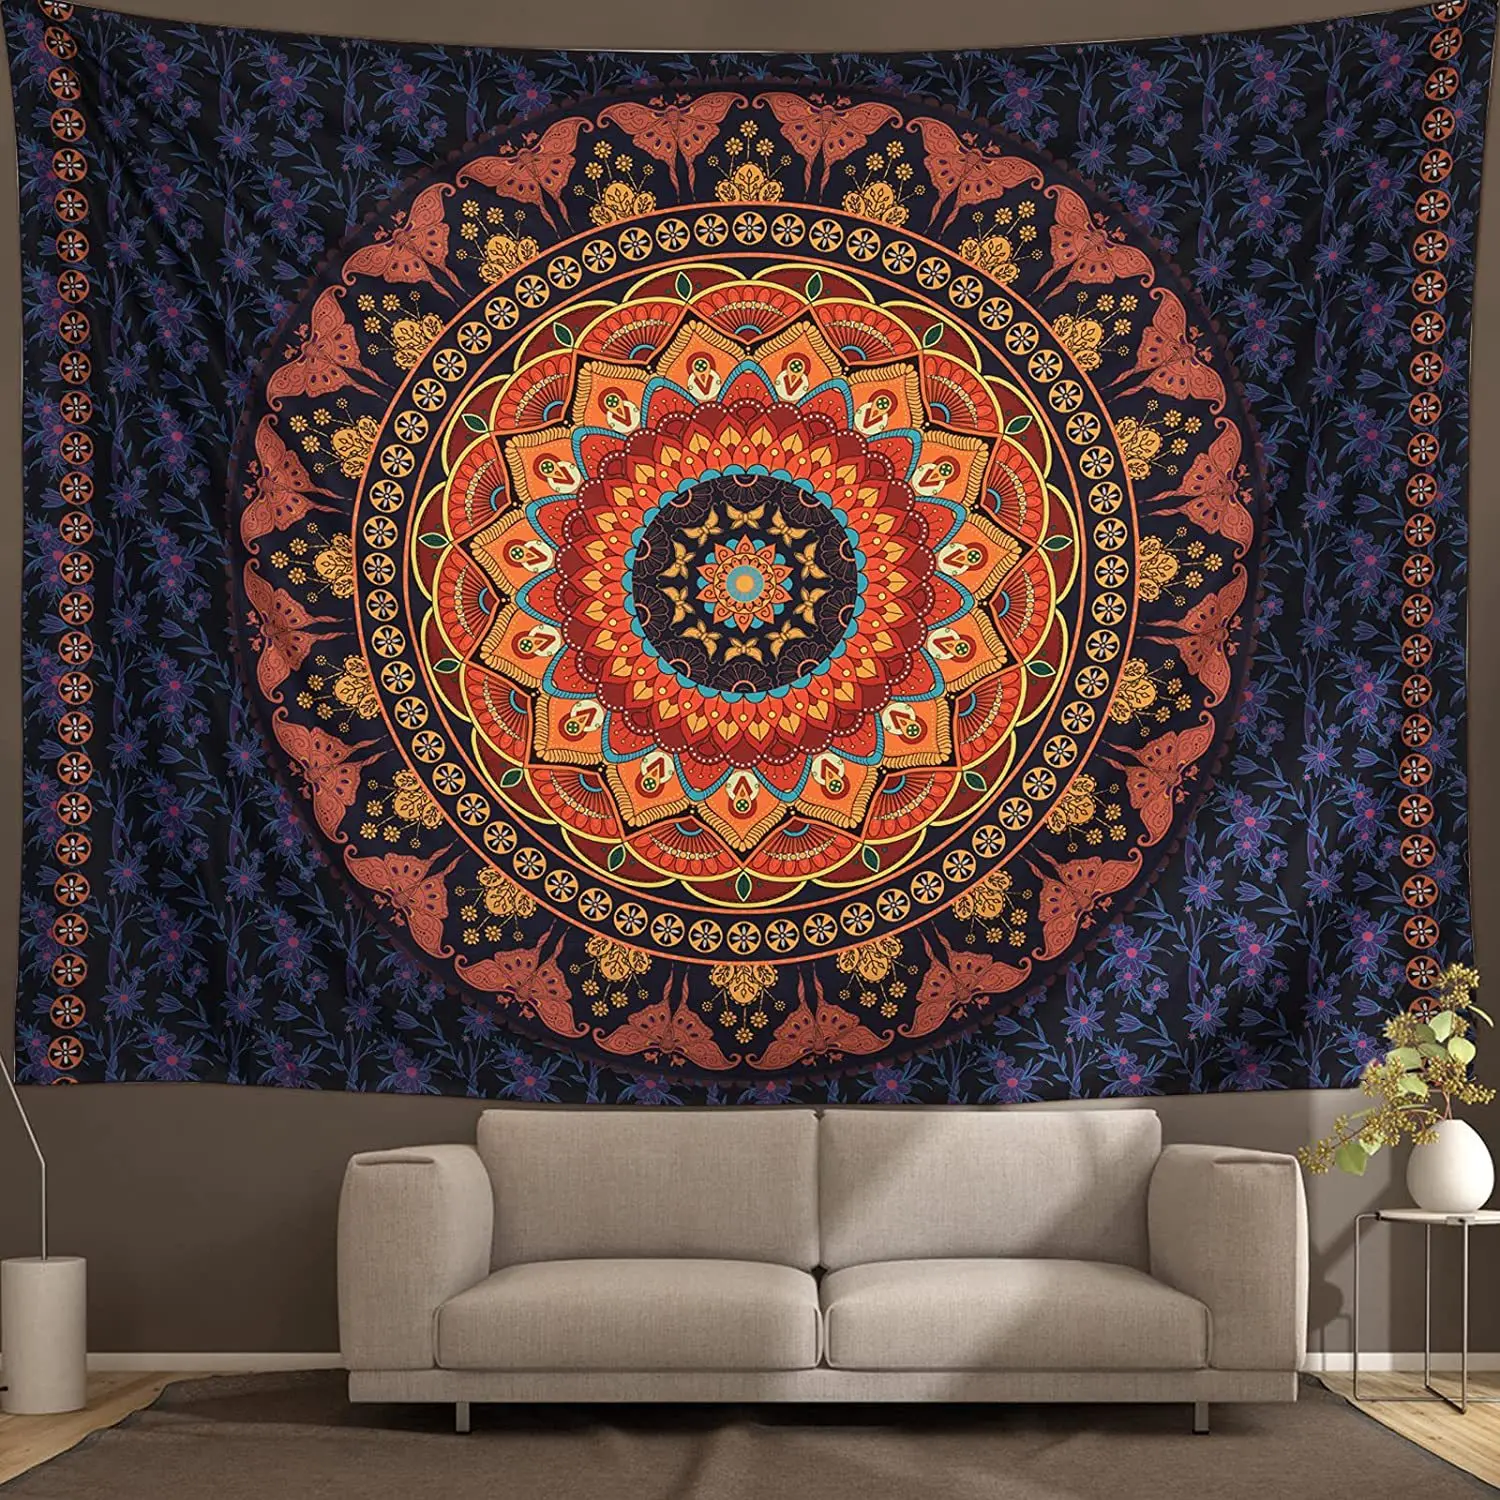 Indian Mandala Tapestry Wall Hanging Decor Hippie Boho Beach Yoga Blanket Mat 